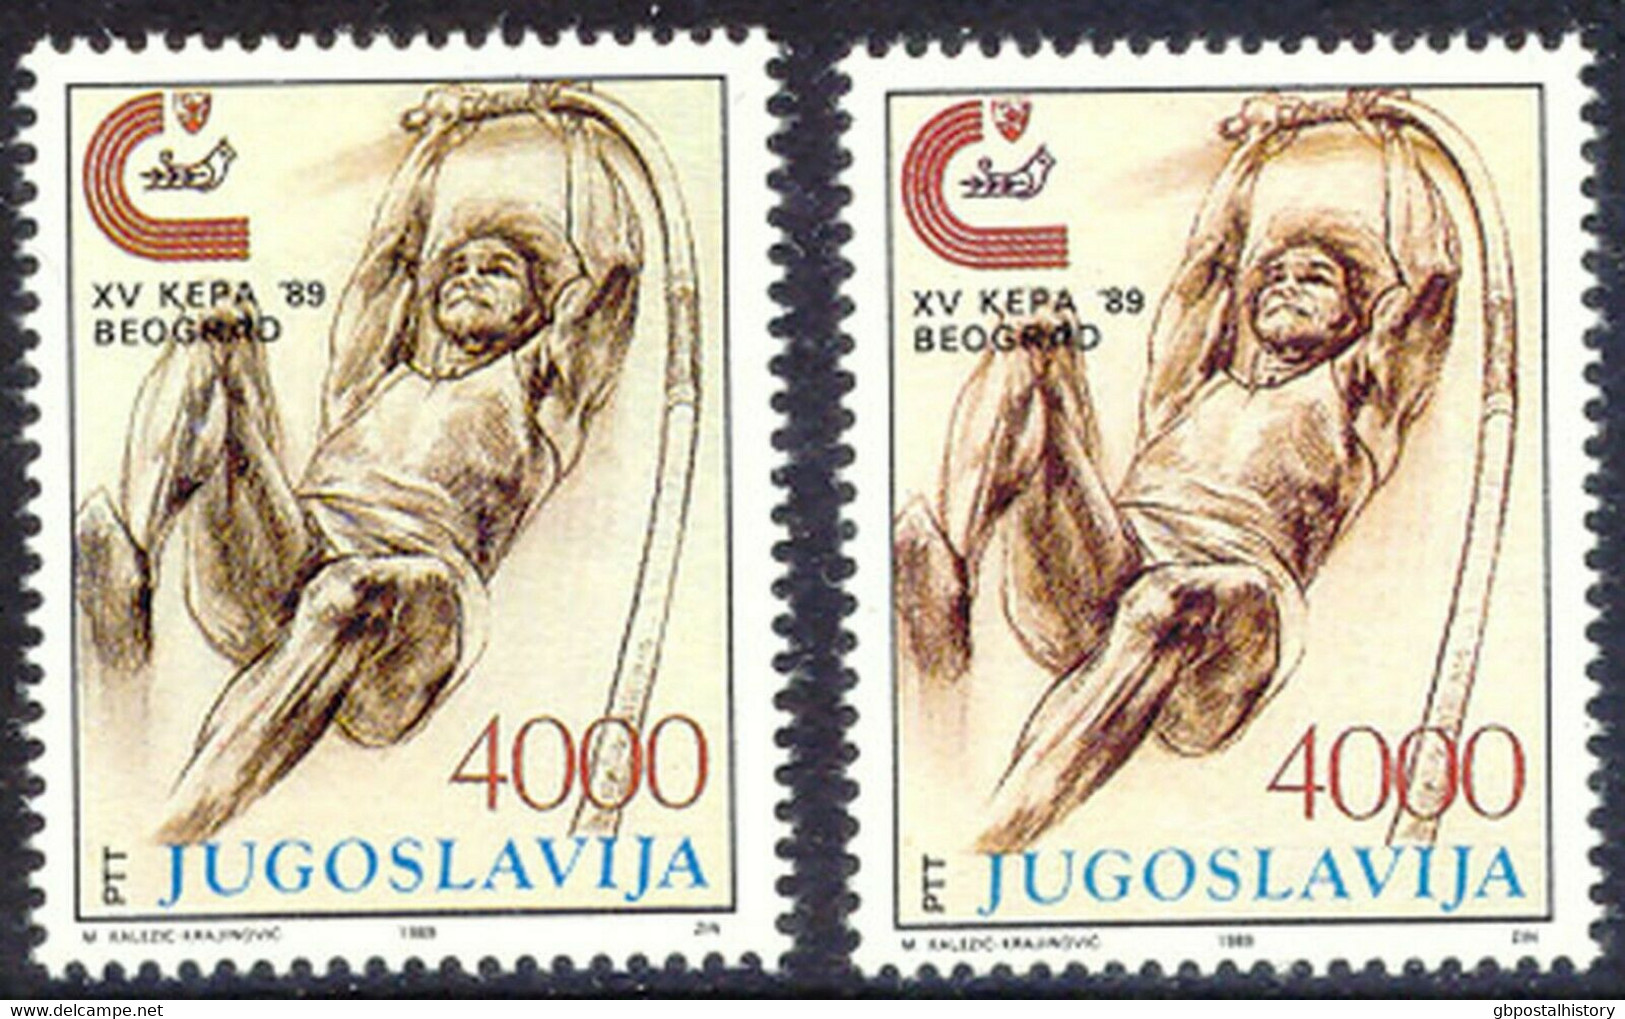 YUGOSLAVIA 1989 European Athletics Championships 4.000 (Din) U/M VARIETY MISSING COLOR - Non Dentelés, épreuves & Variétés